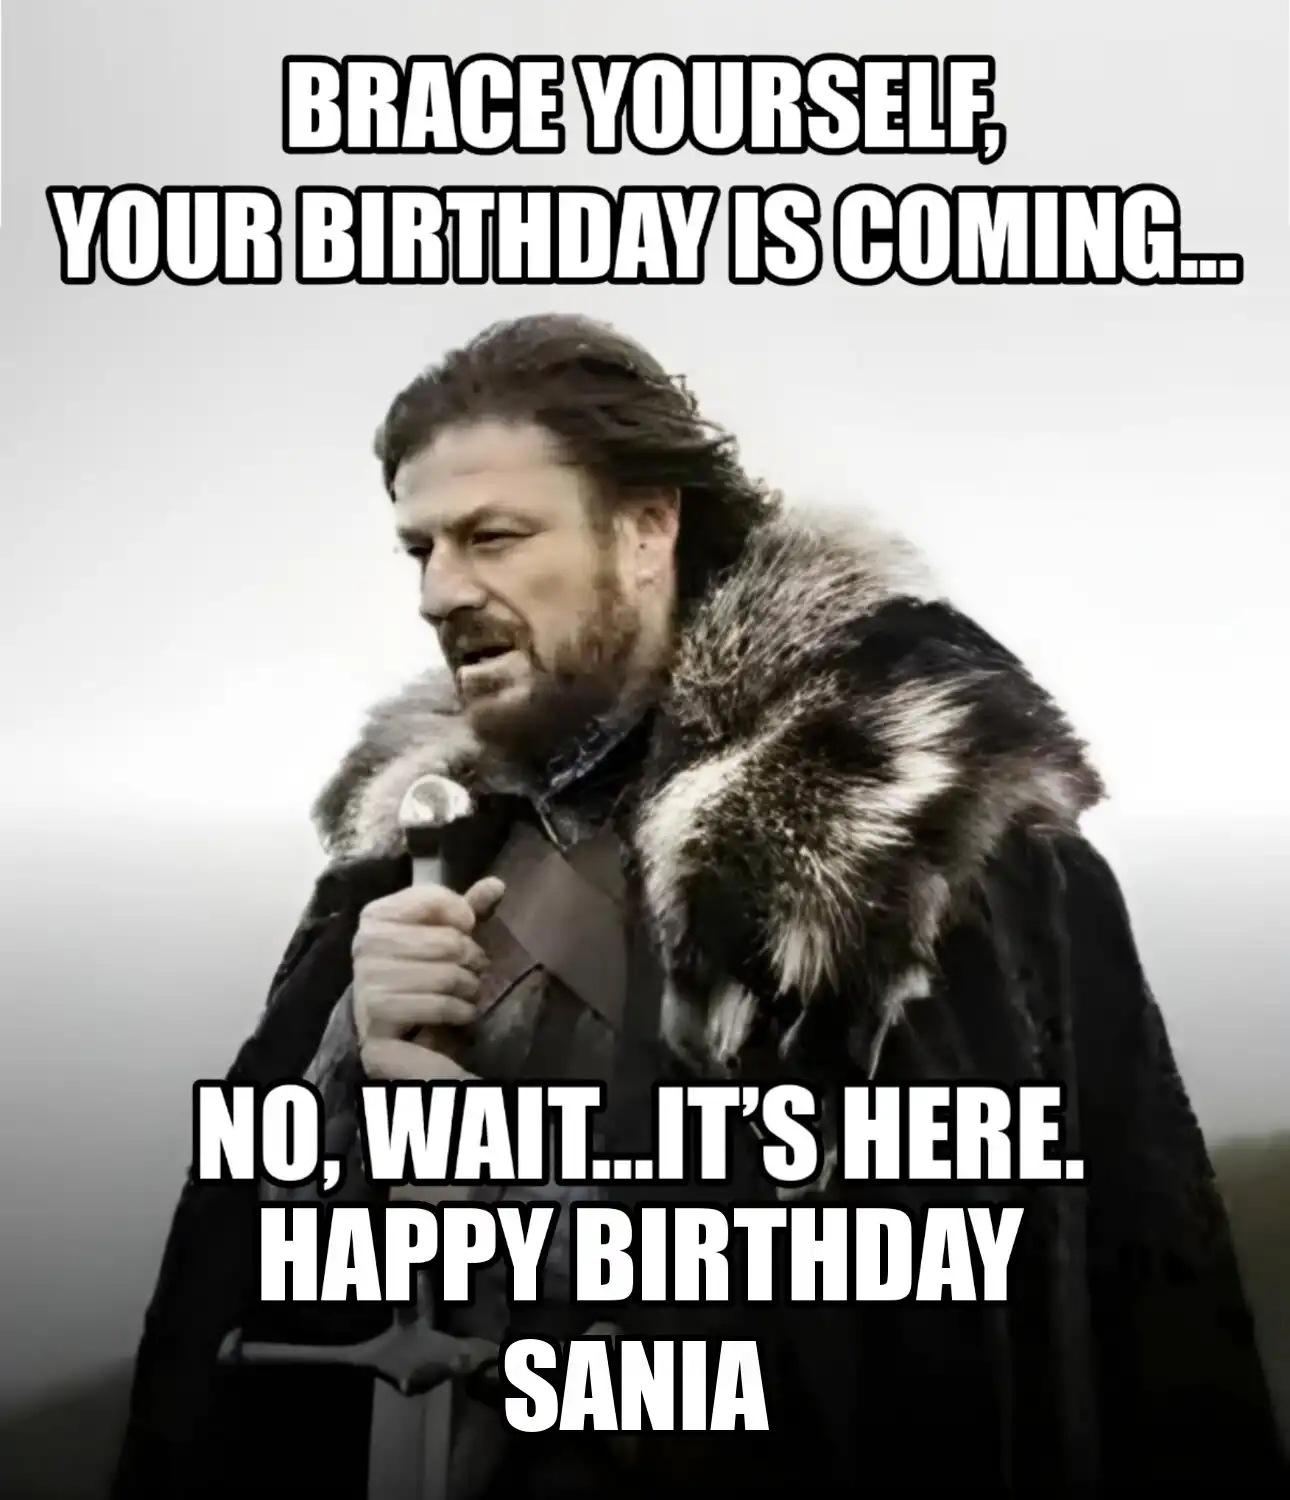 Happy Birthday Sania Brace Yourself Your Birthday Is Coming Meme